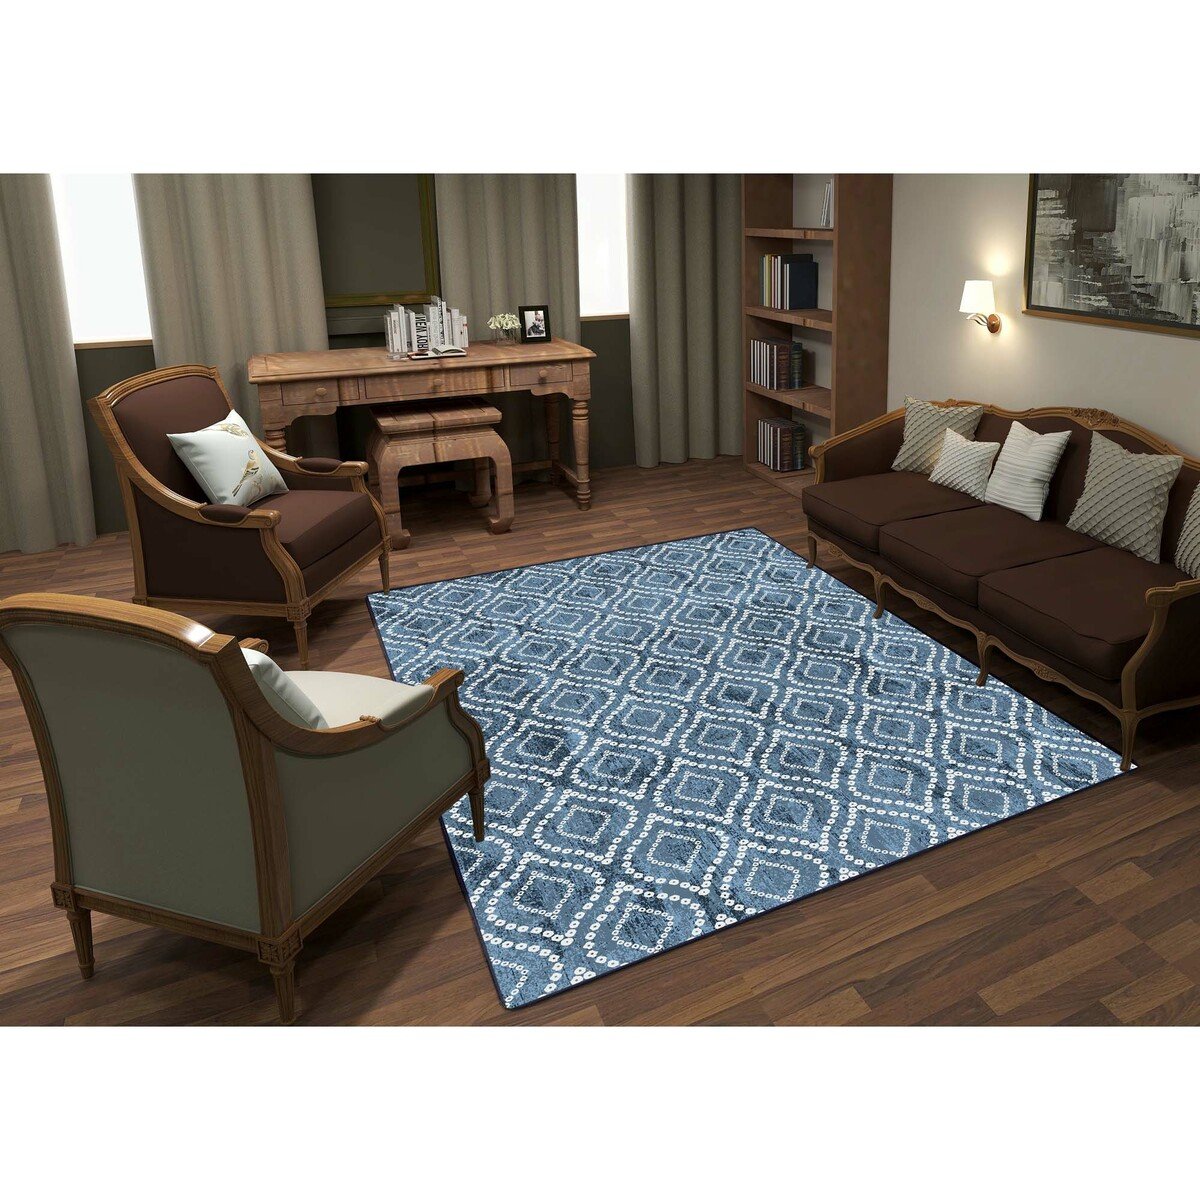 Homewell Carpet Vintage Indigo 120X160cm